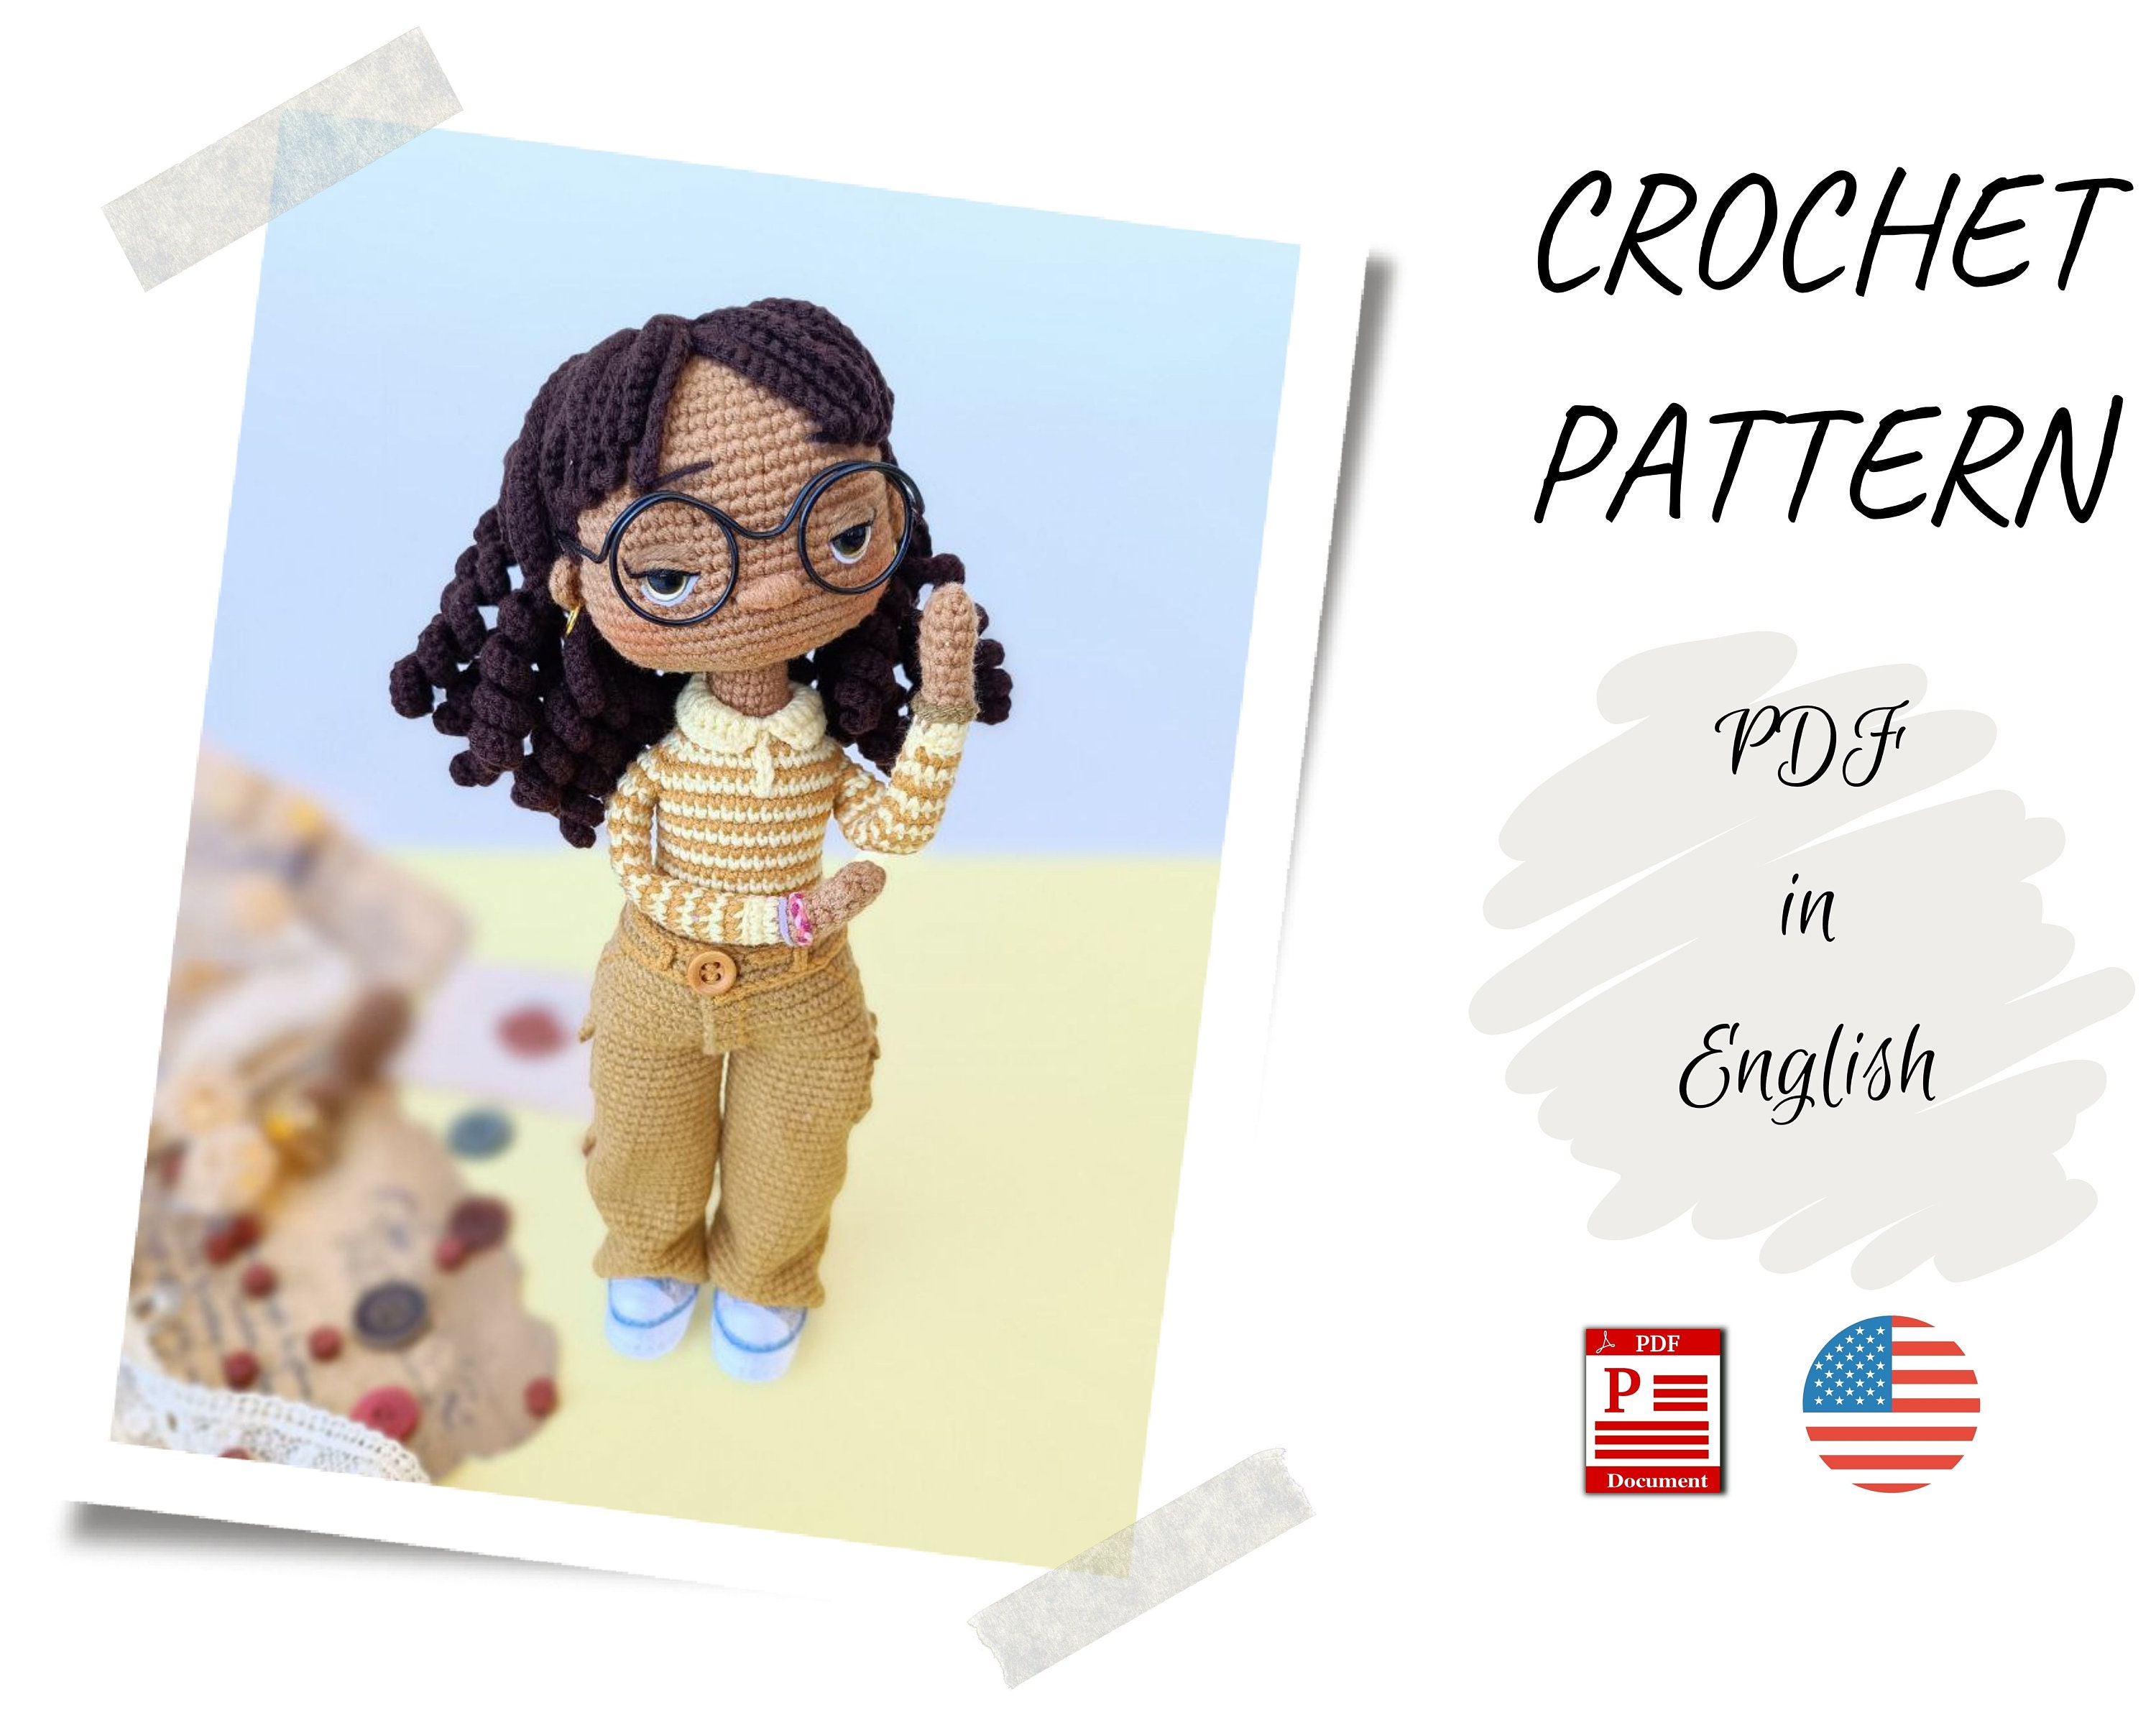 Crochet Cafe: Recipes for Amigurumi Crochet Patterns by Lauren Espy,  Paperback